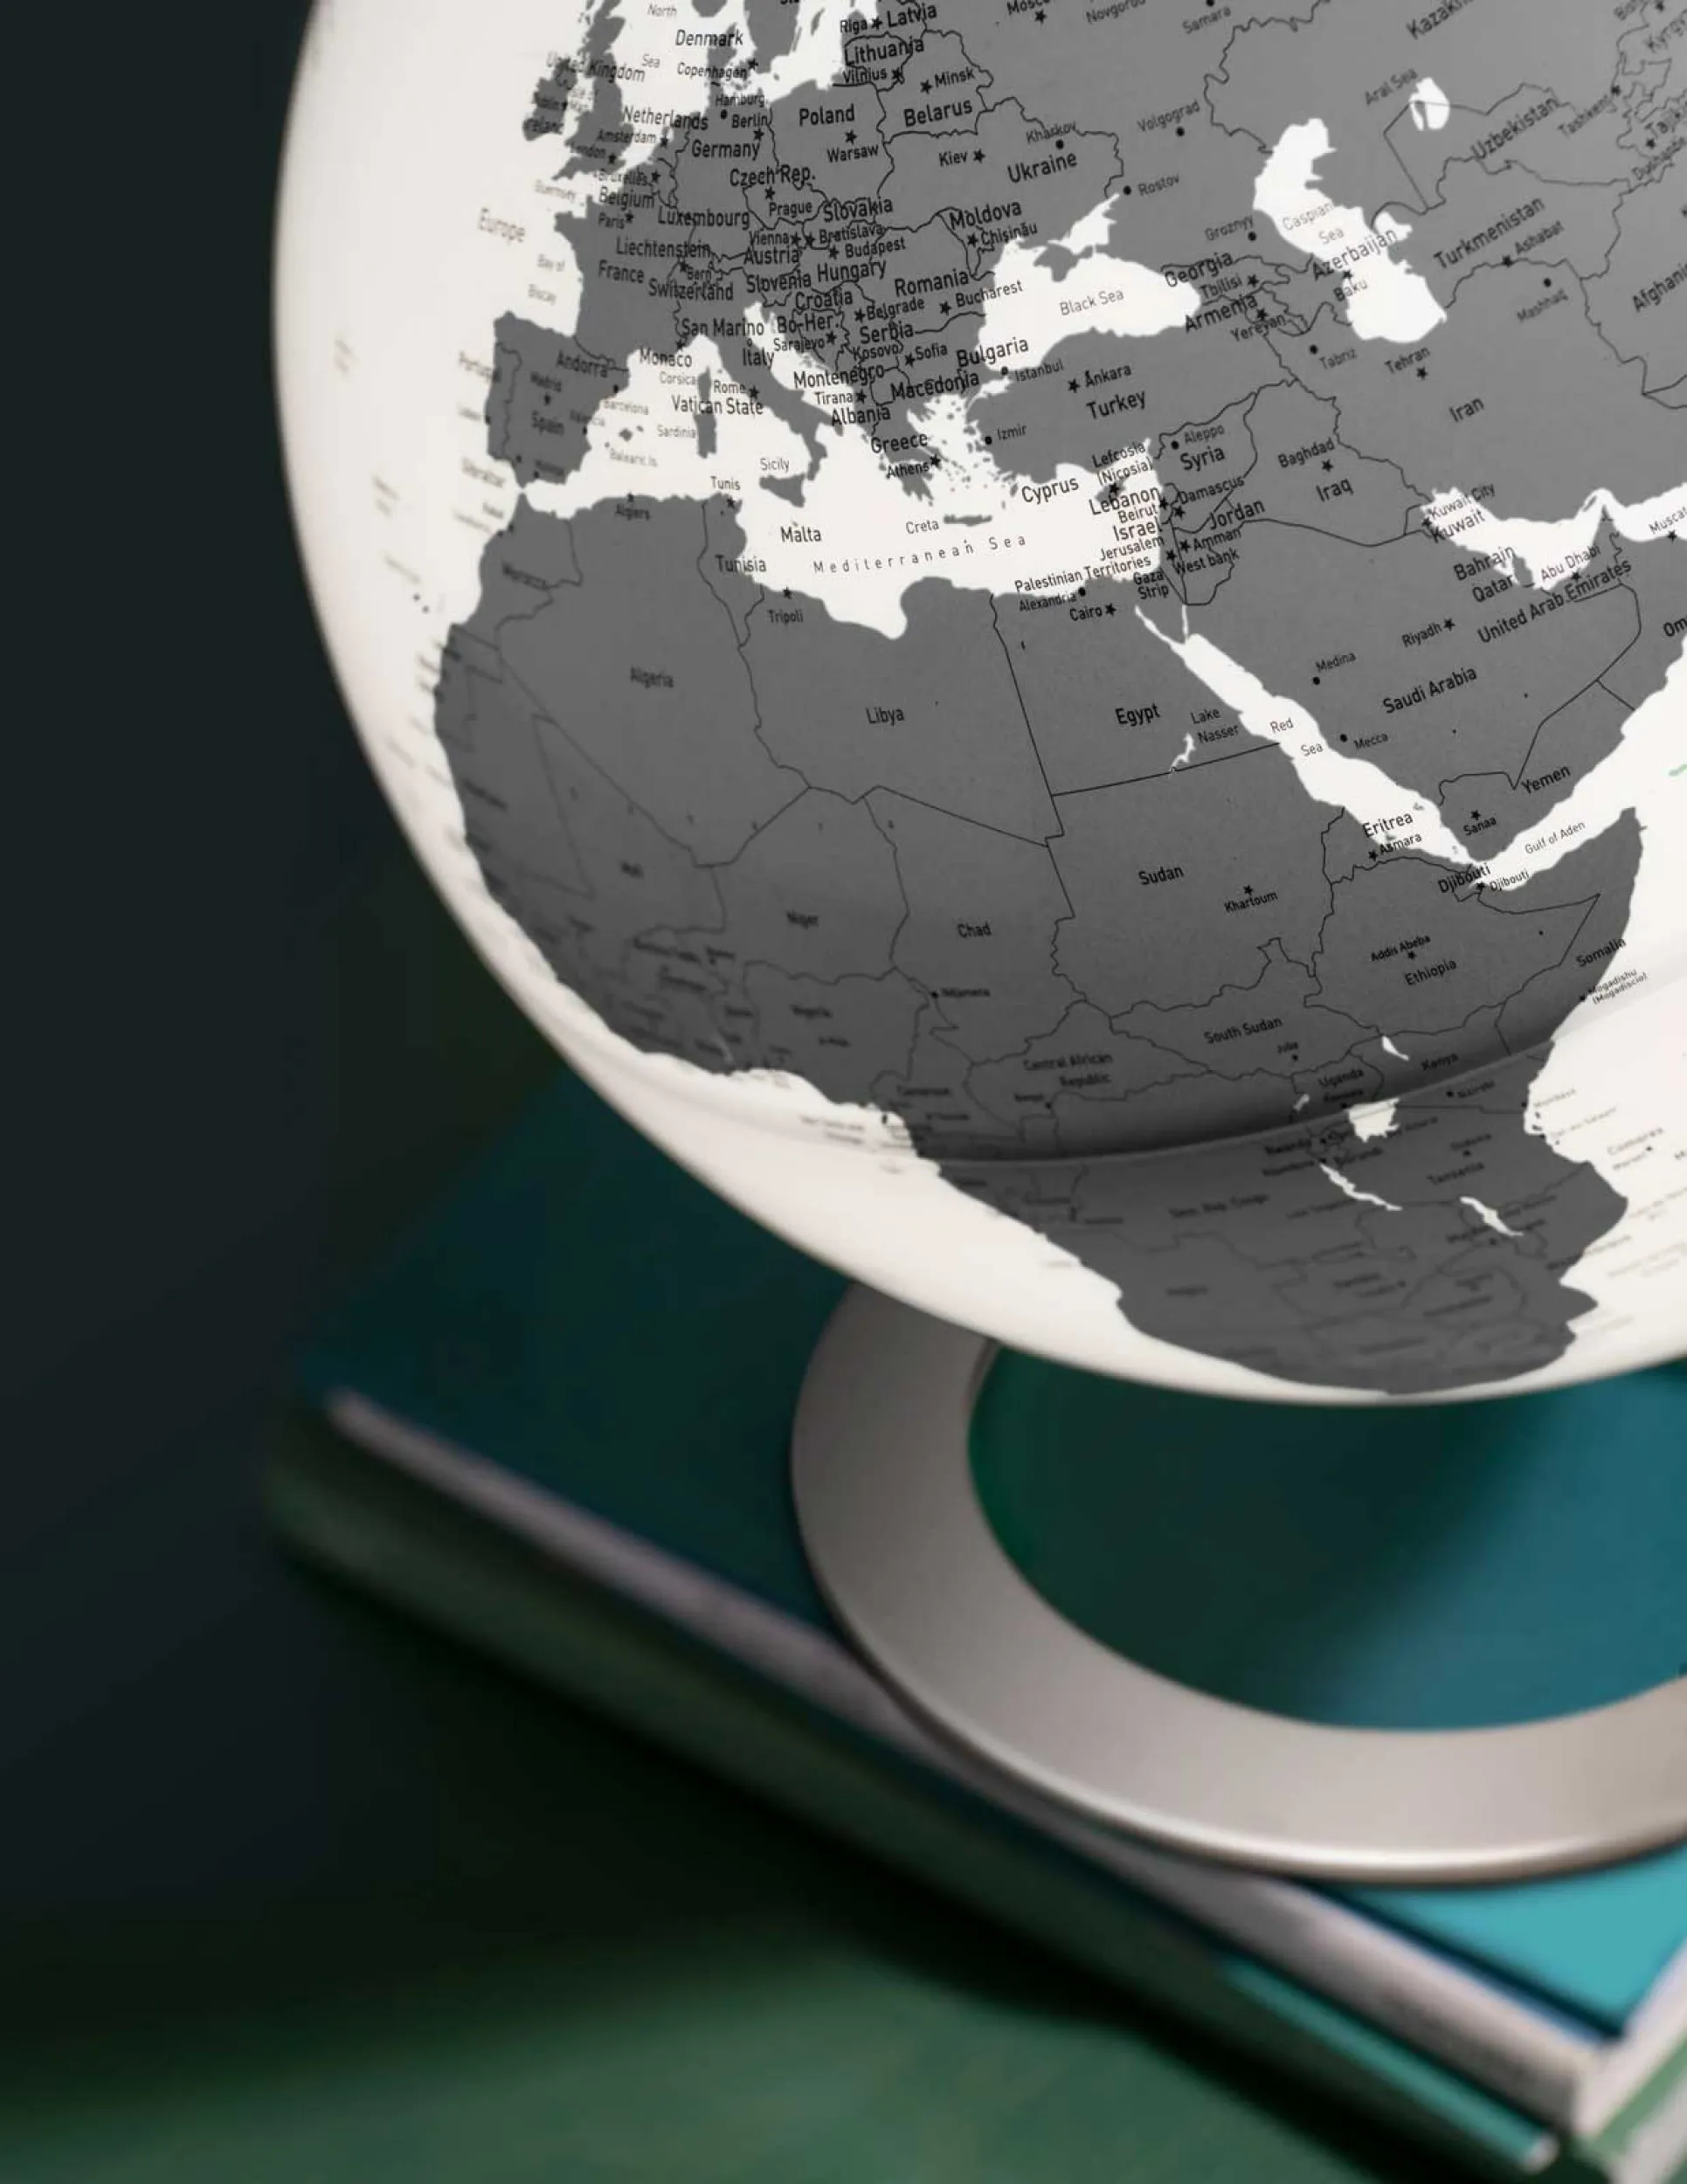 Illuminated Design globe - Atmosphere "New World" iGlobe Charcoal - Ø 25 cm